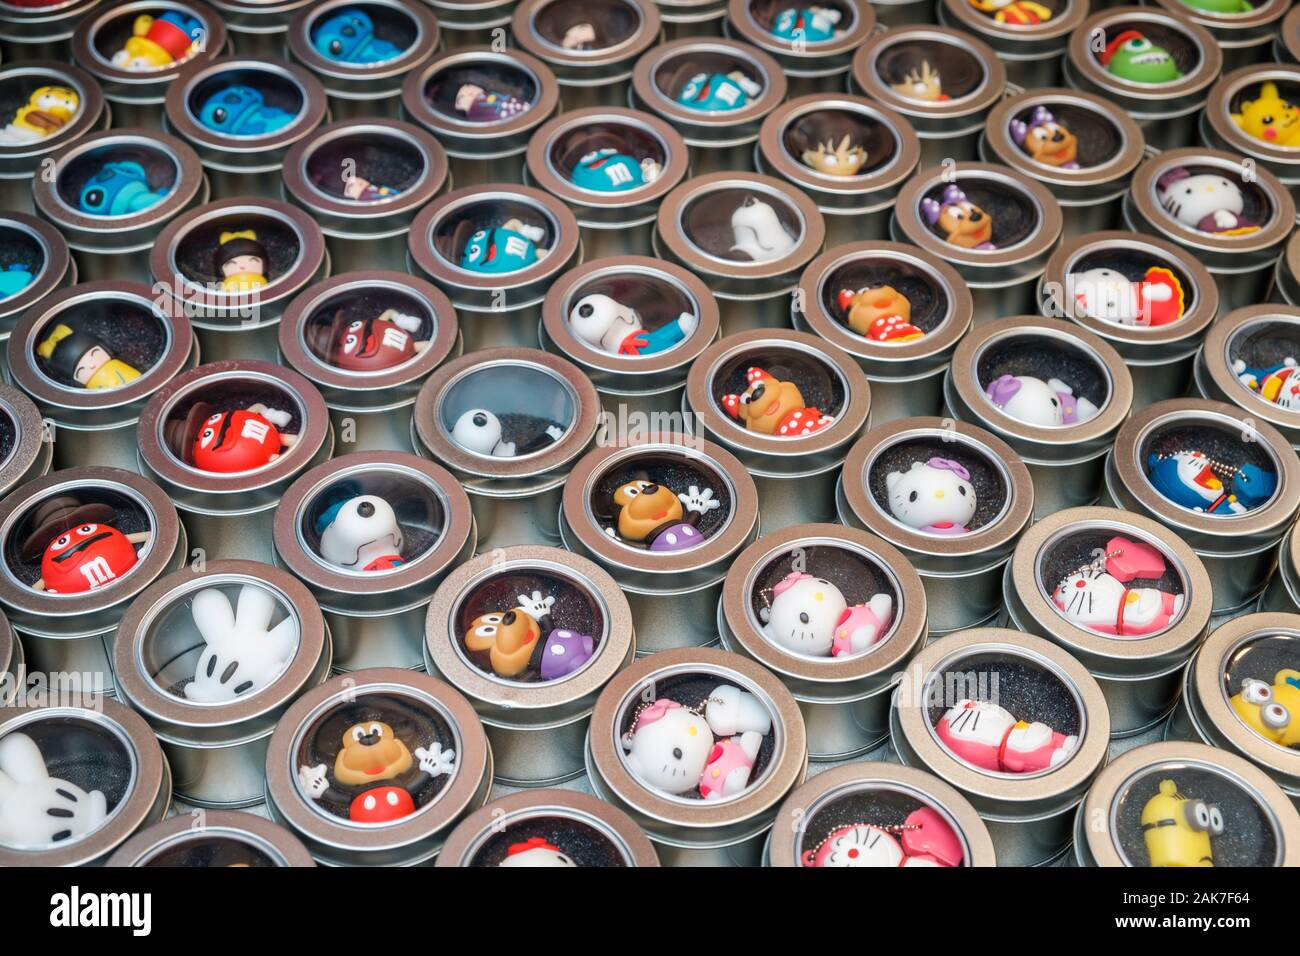 Hong Kong Cina - Novembre 2019: Usb Stick con toy / cartoon / fumetto caratteri sulla strada del mercato (Ladie's) sul mercato di Hong Kong , Tung Choi Street Foto Stock